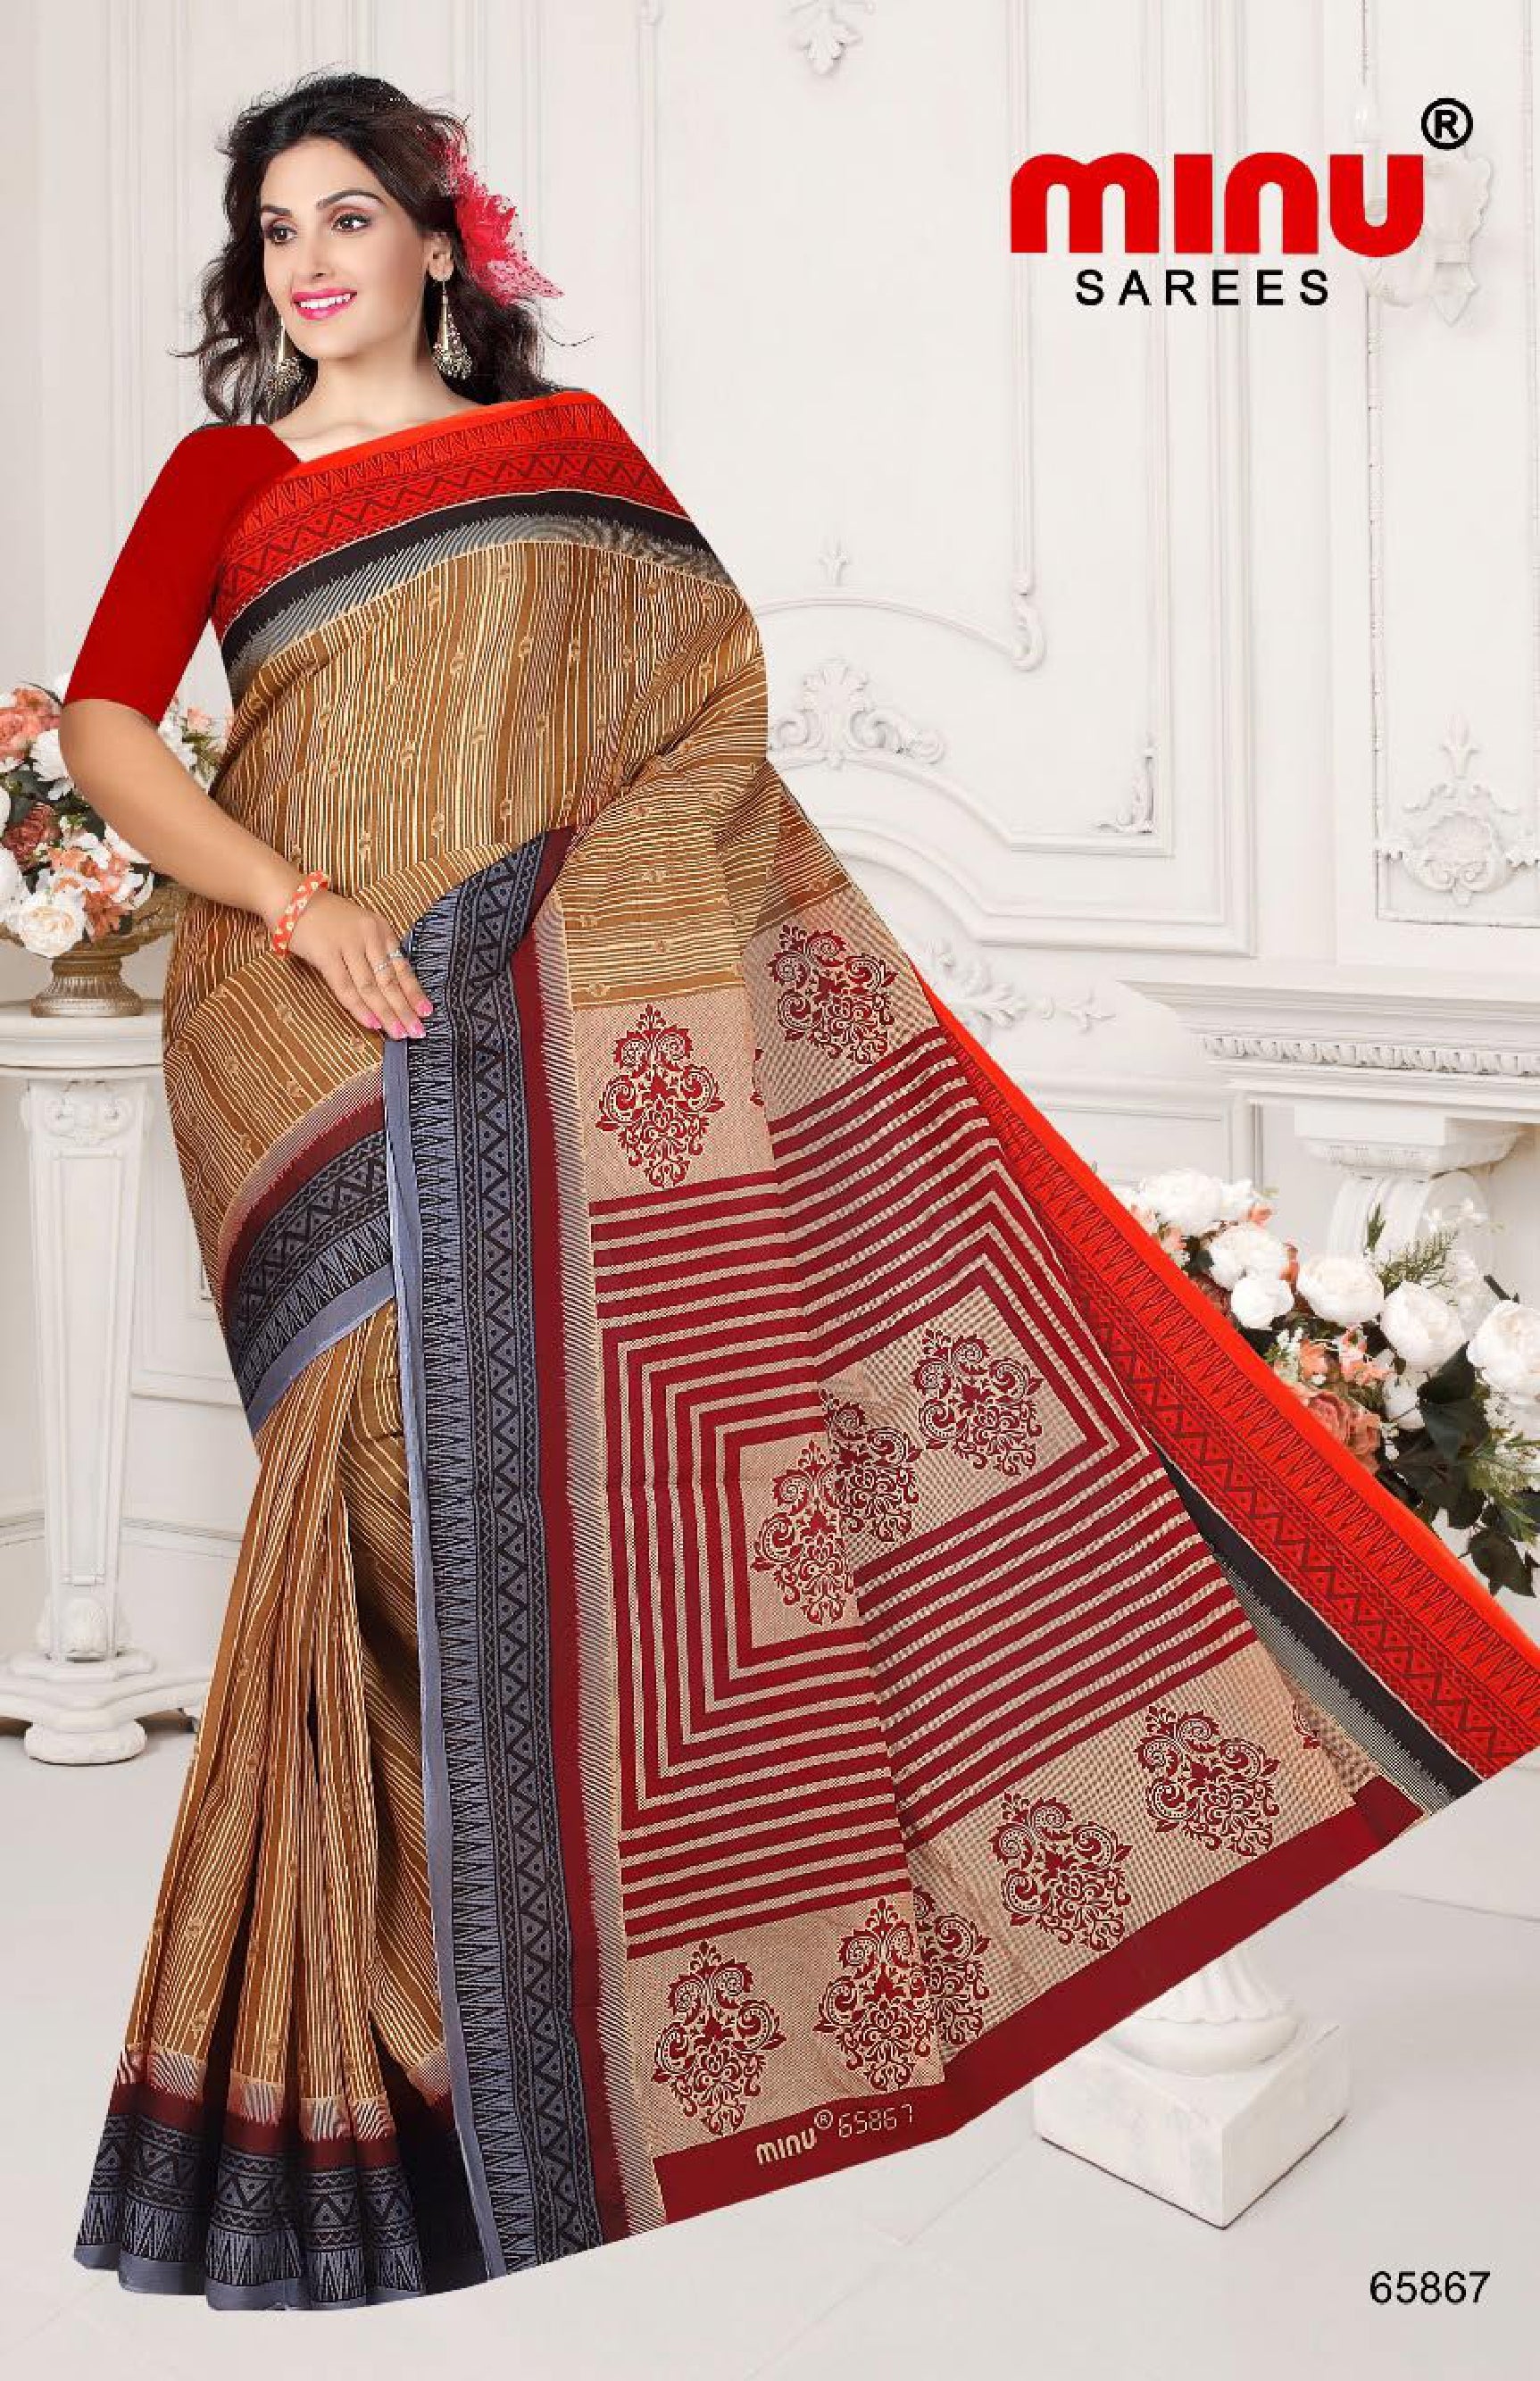 multi color printed saree wearing woman